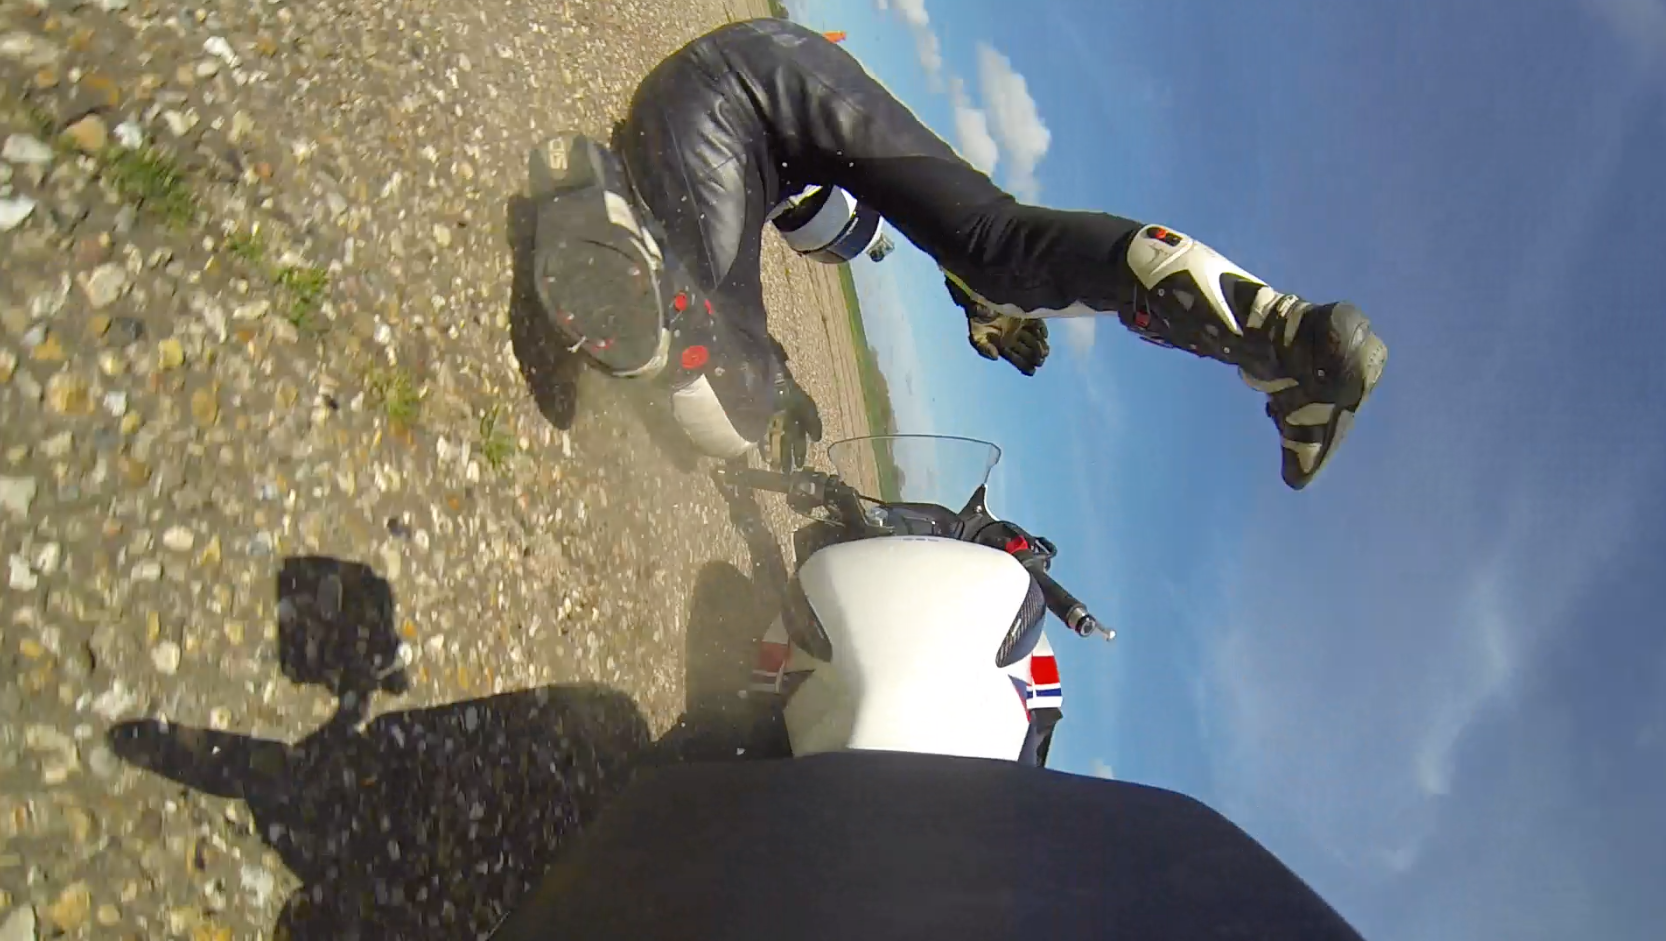 Video: R&G crash tests brand new motorcycle